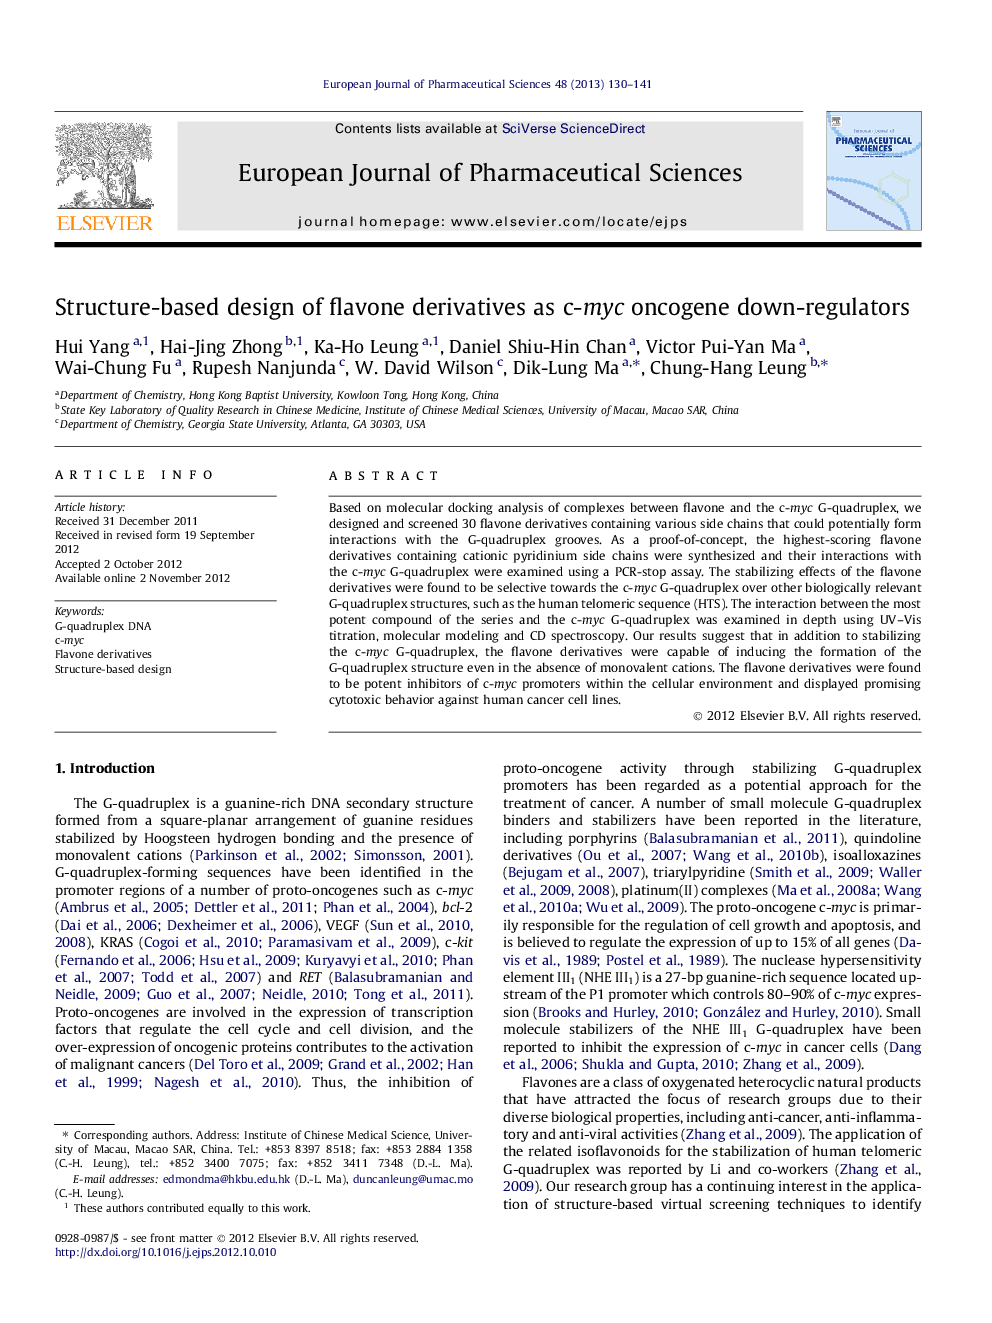 Structure-based design of flavone derivatives as c-myc oncogene down-regulators